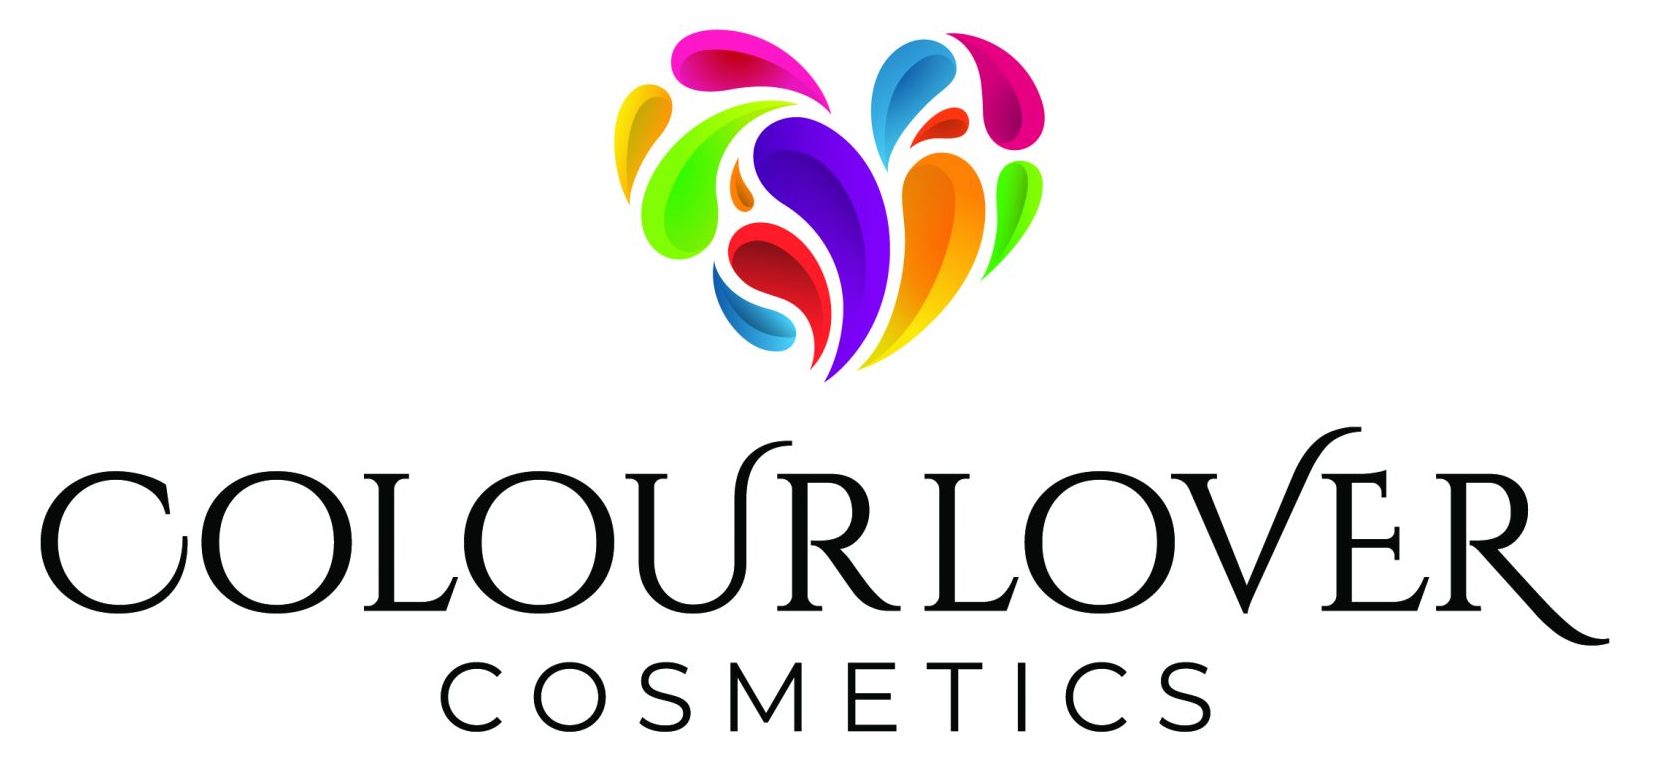 Colour Lover Cosmetics